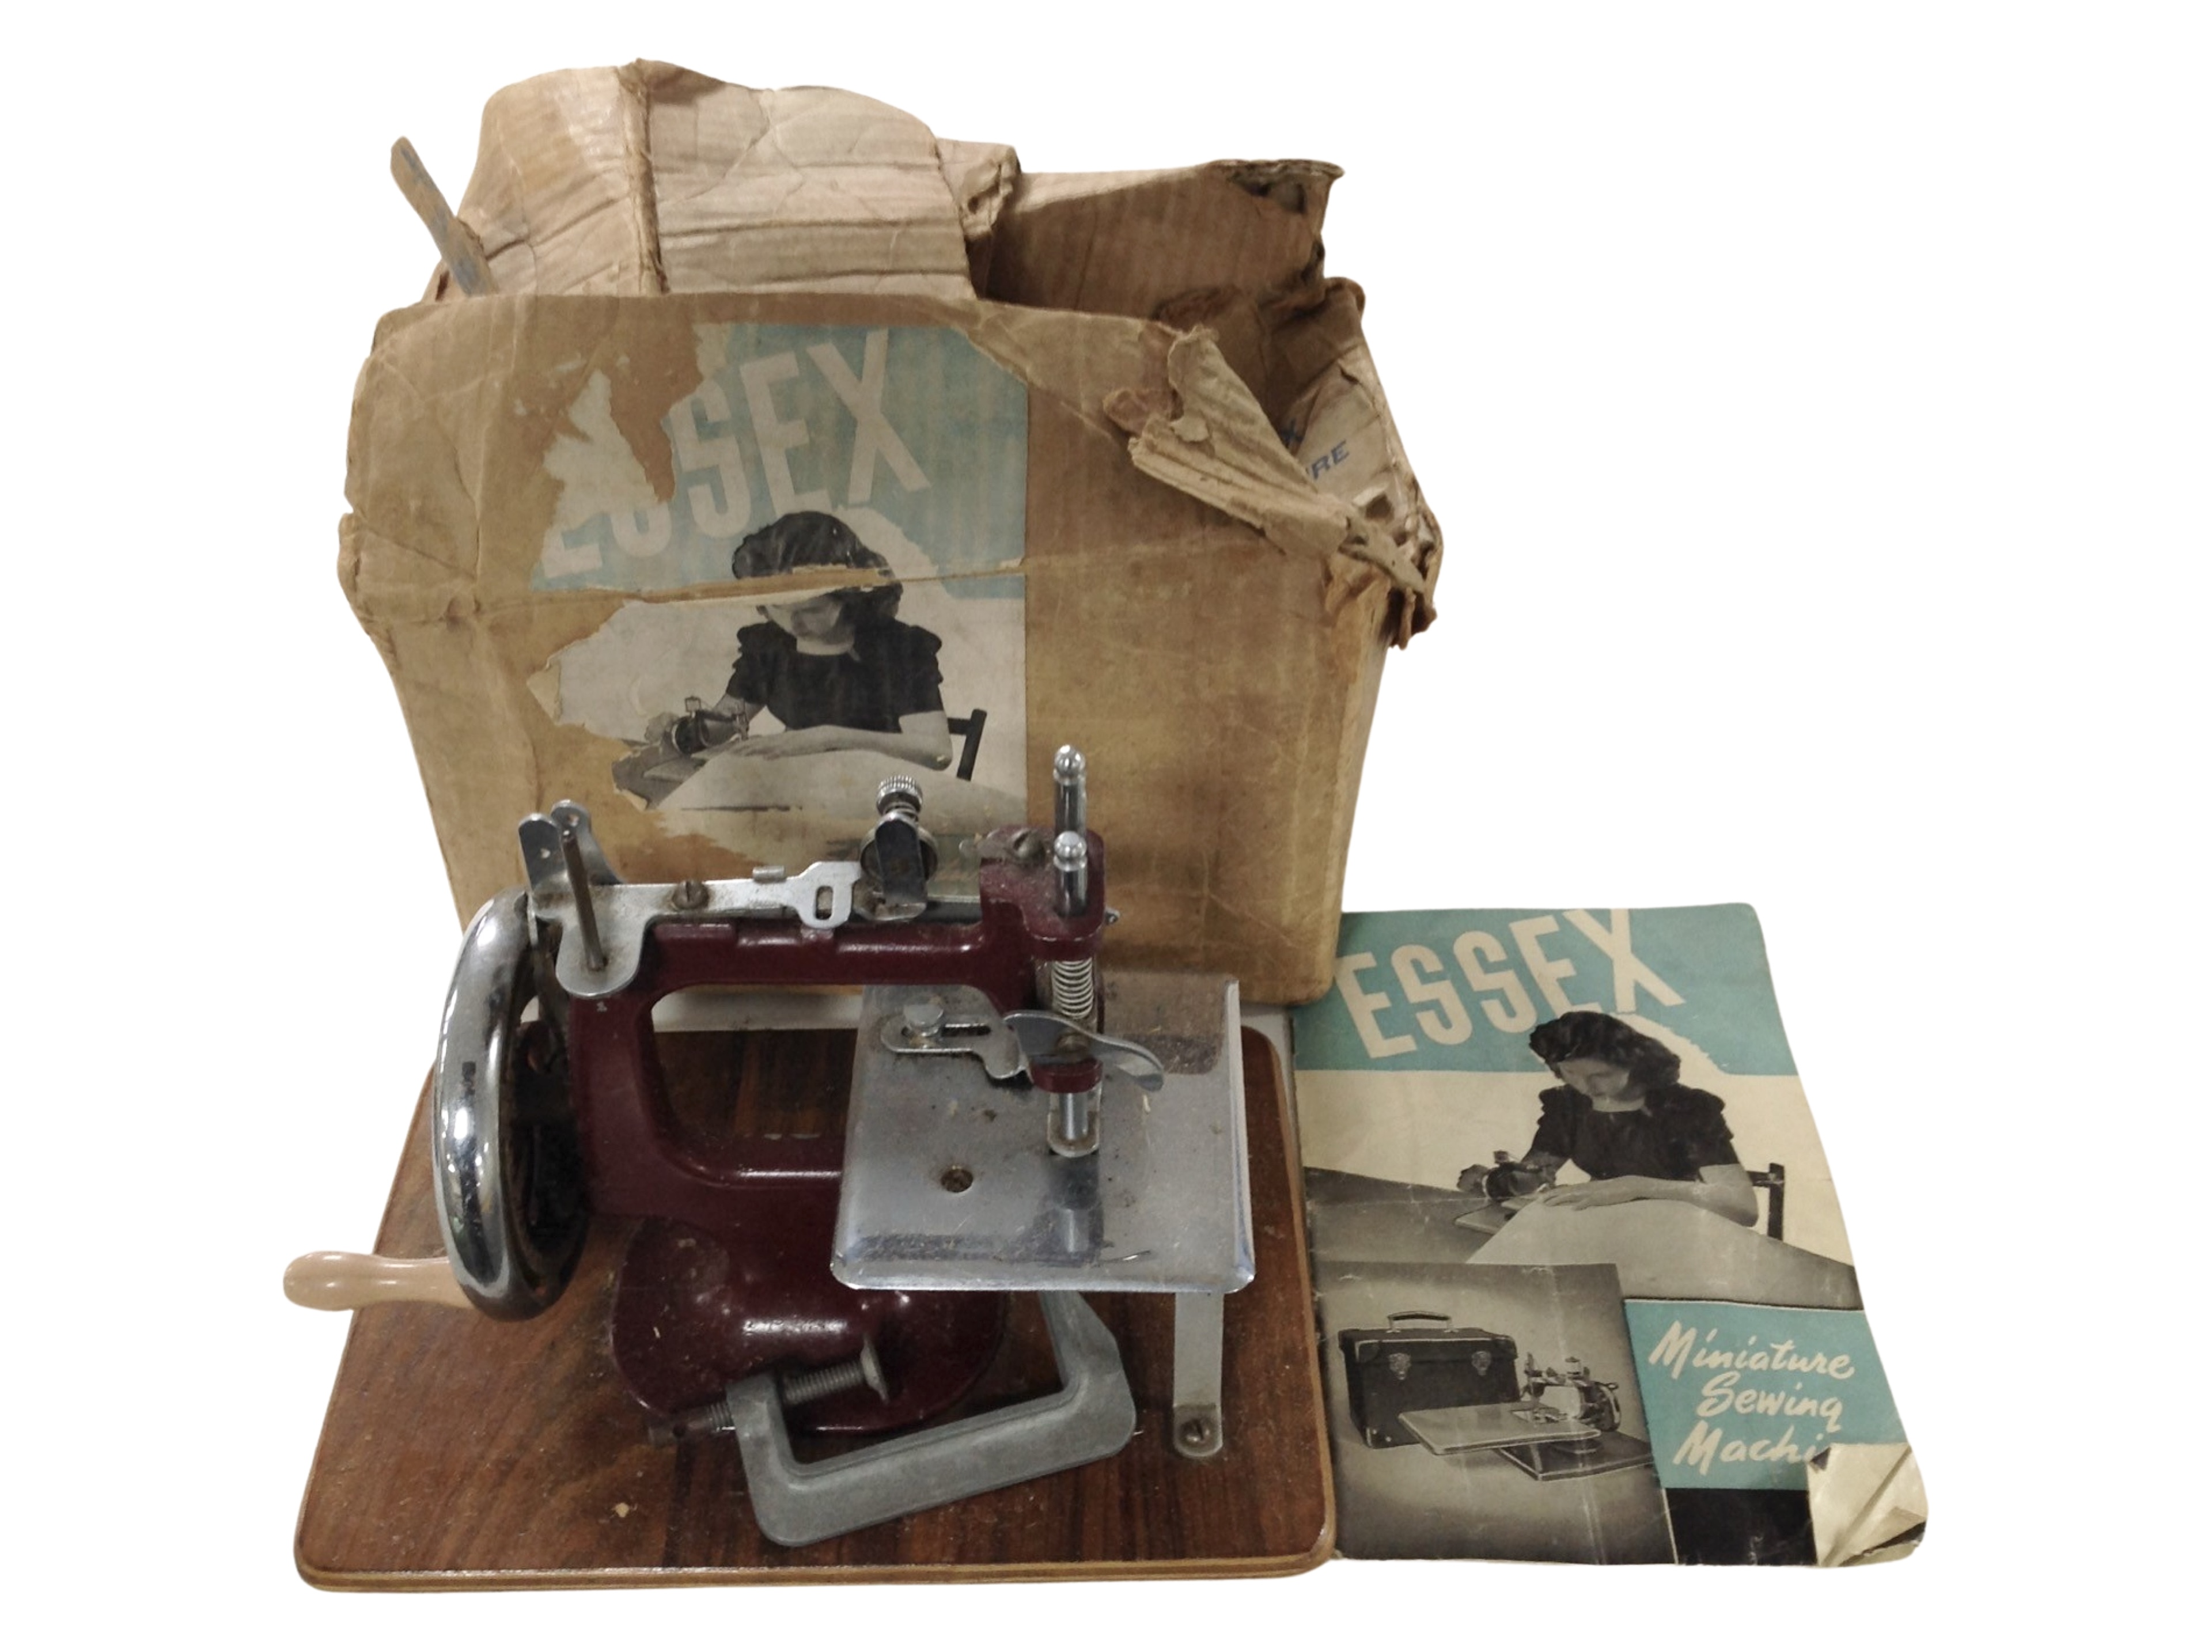 An Essex child's hand sewing machine in original box.